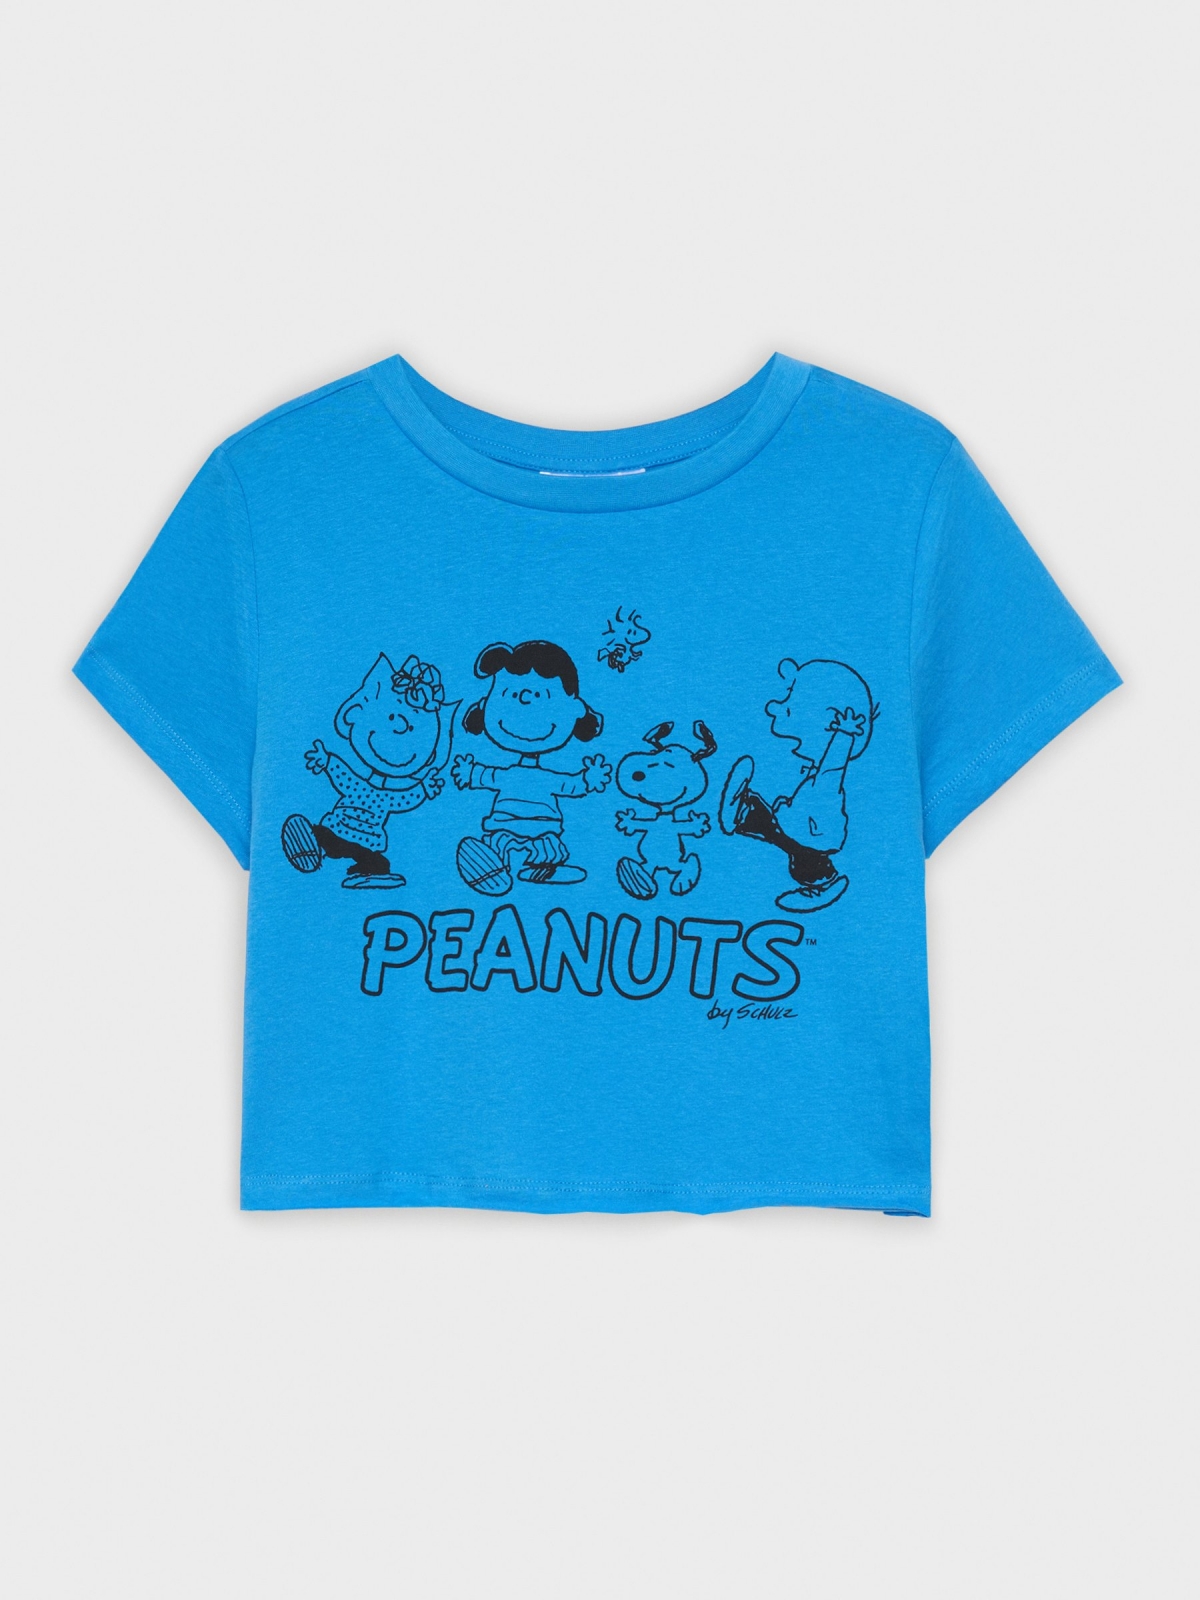  Camiseta Peanuts azul